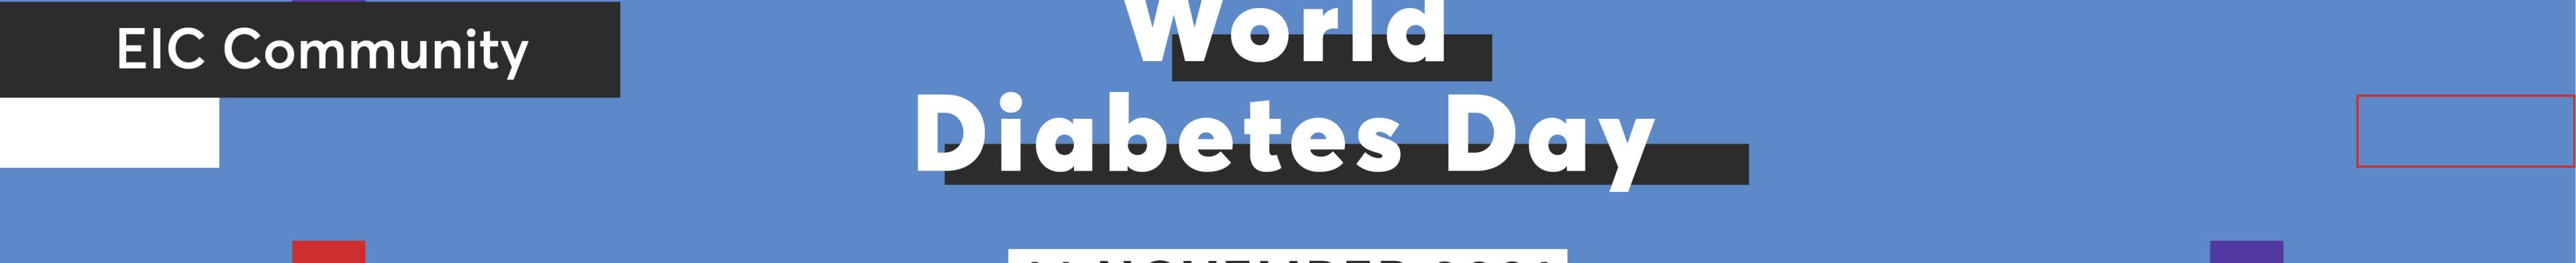 eic_world_diabetes_day_community_banner.jpg